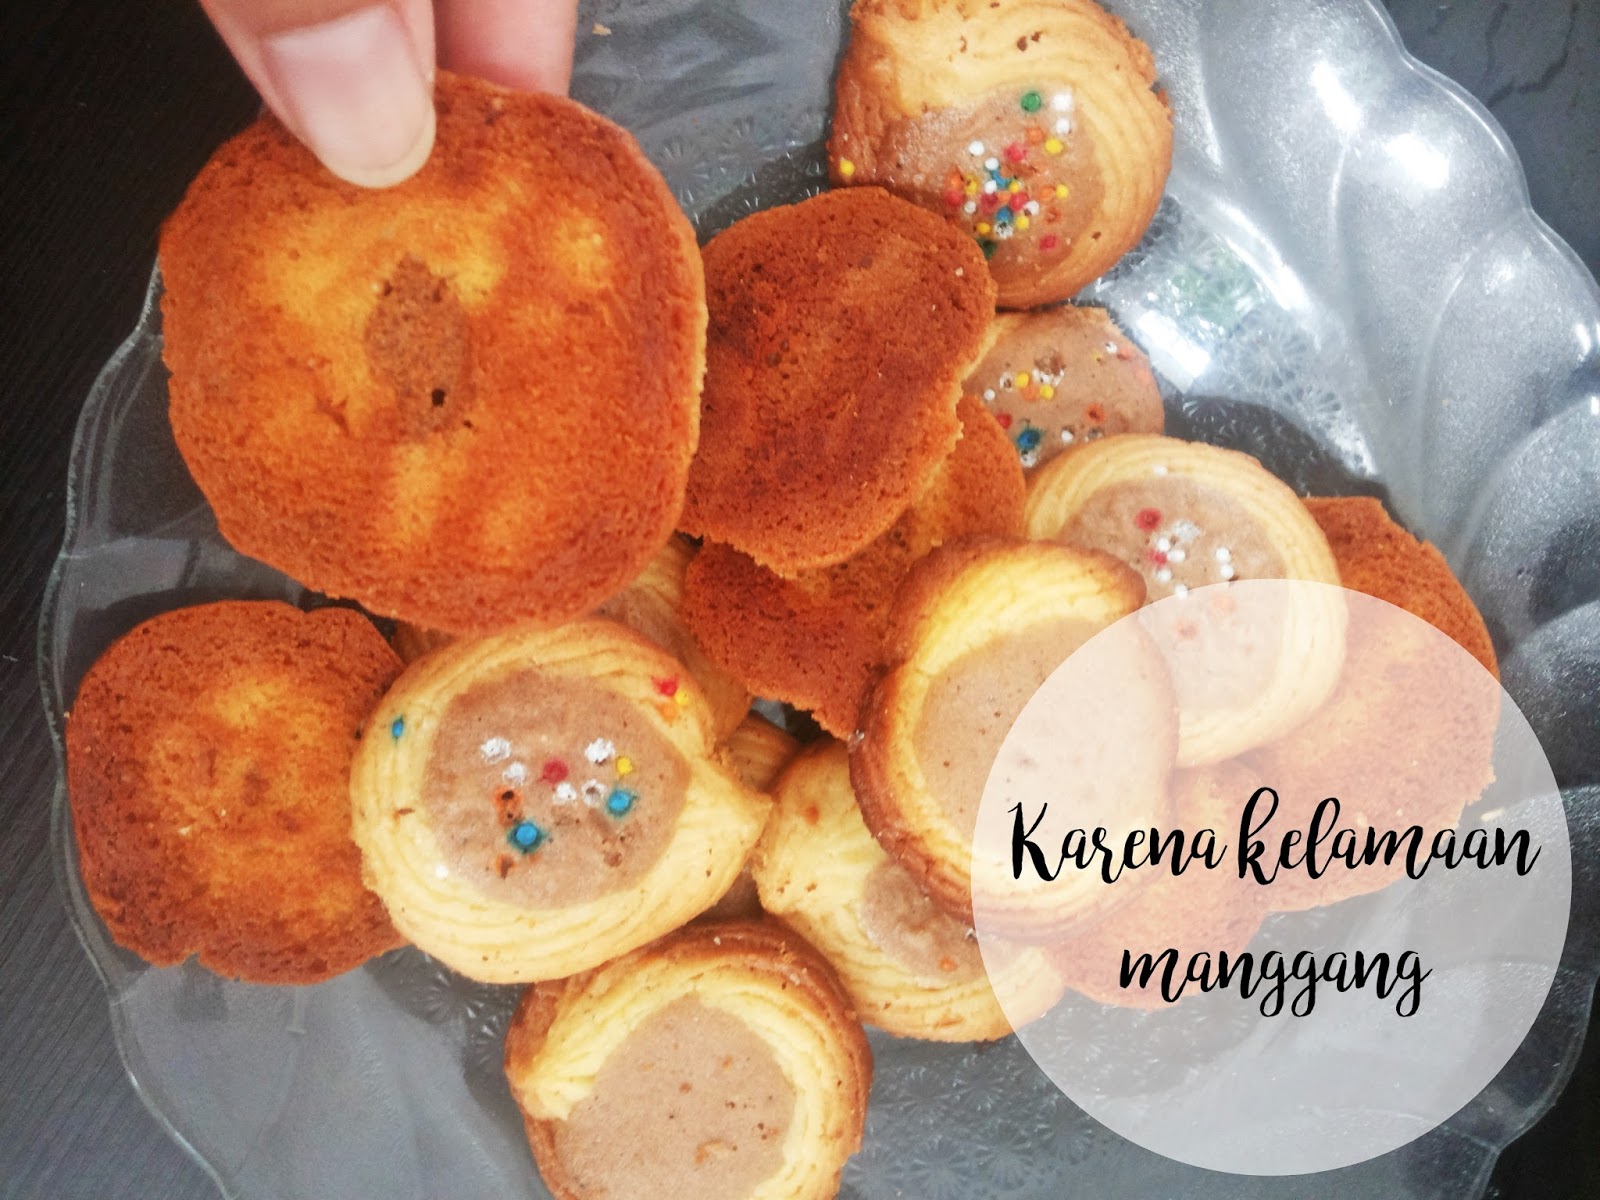 CeRiTa cHa: Resep Kue Bolu Cookies